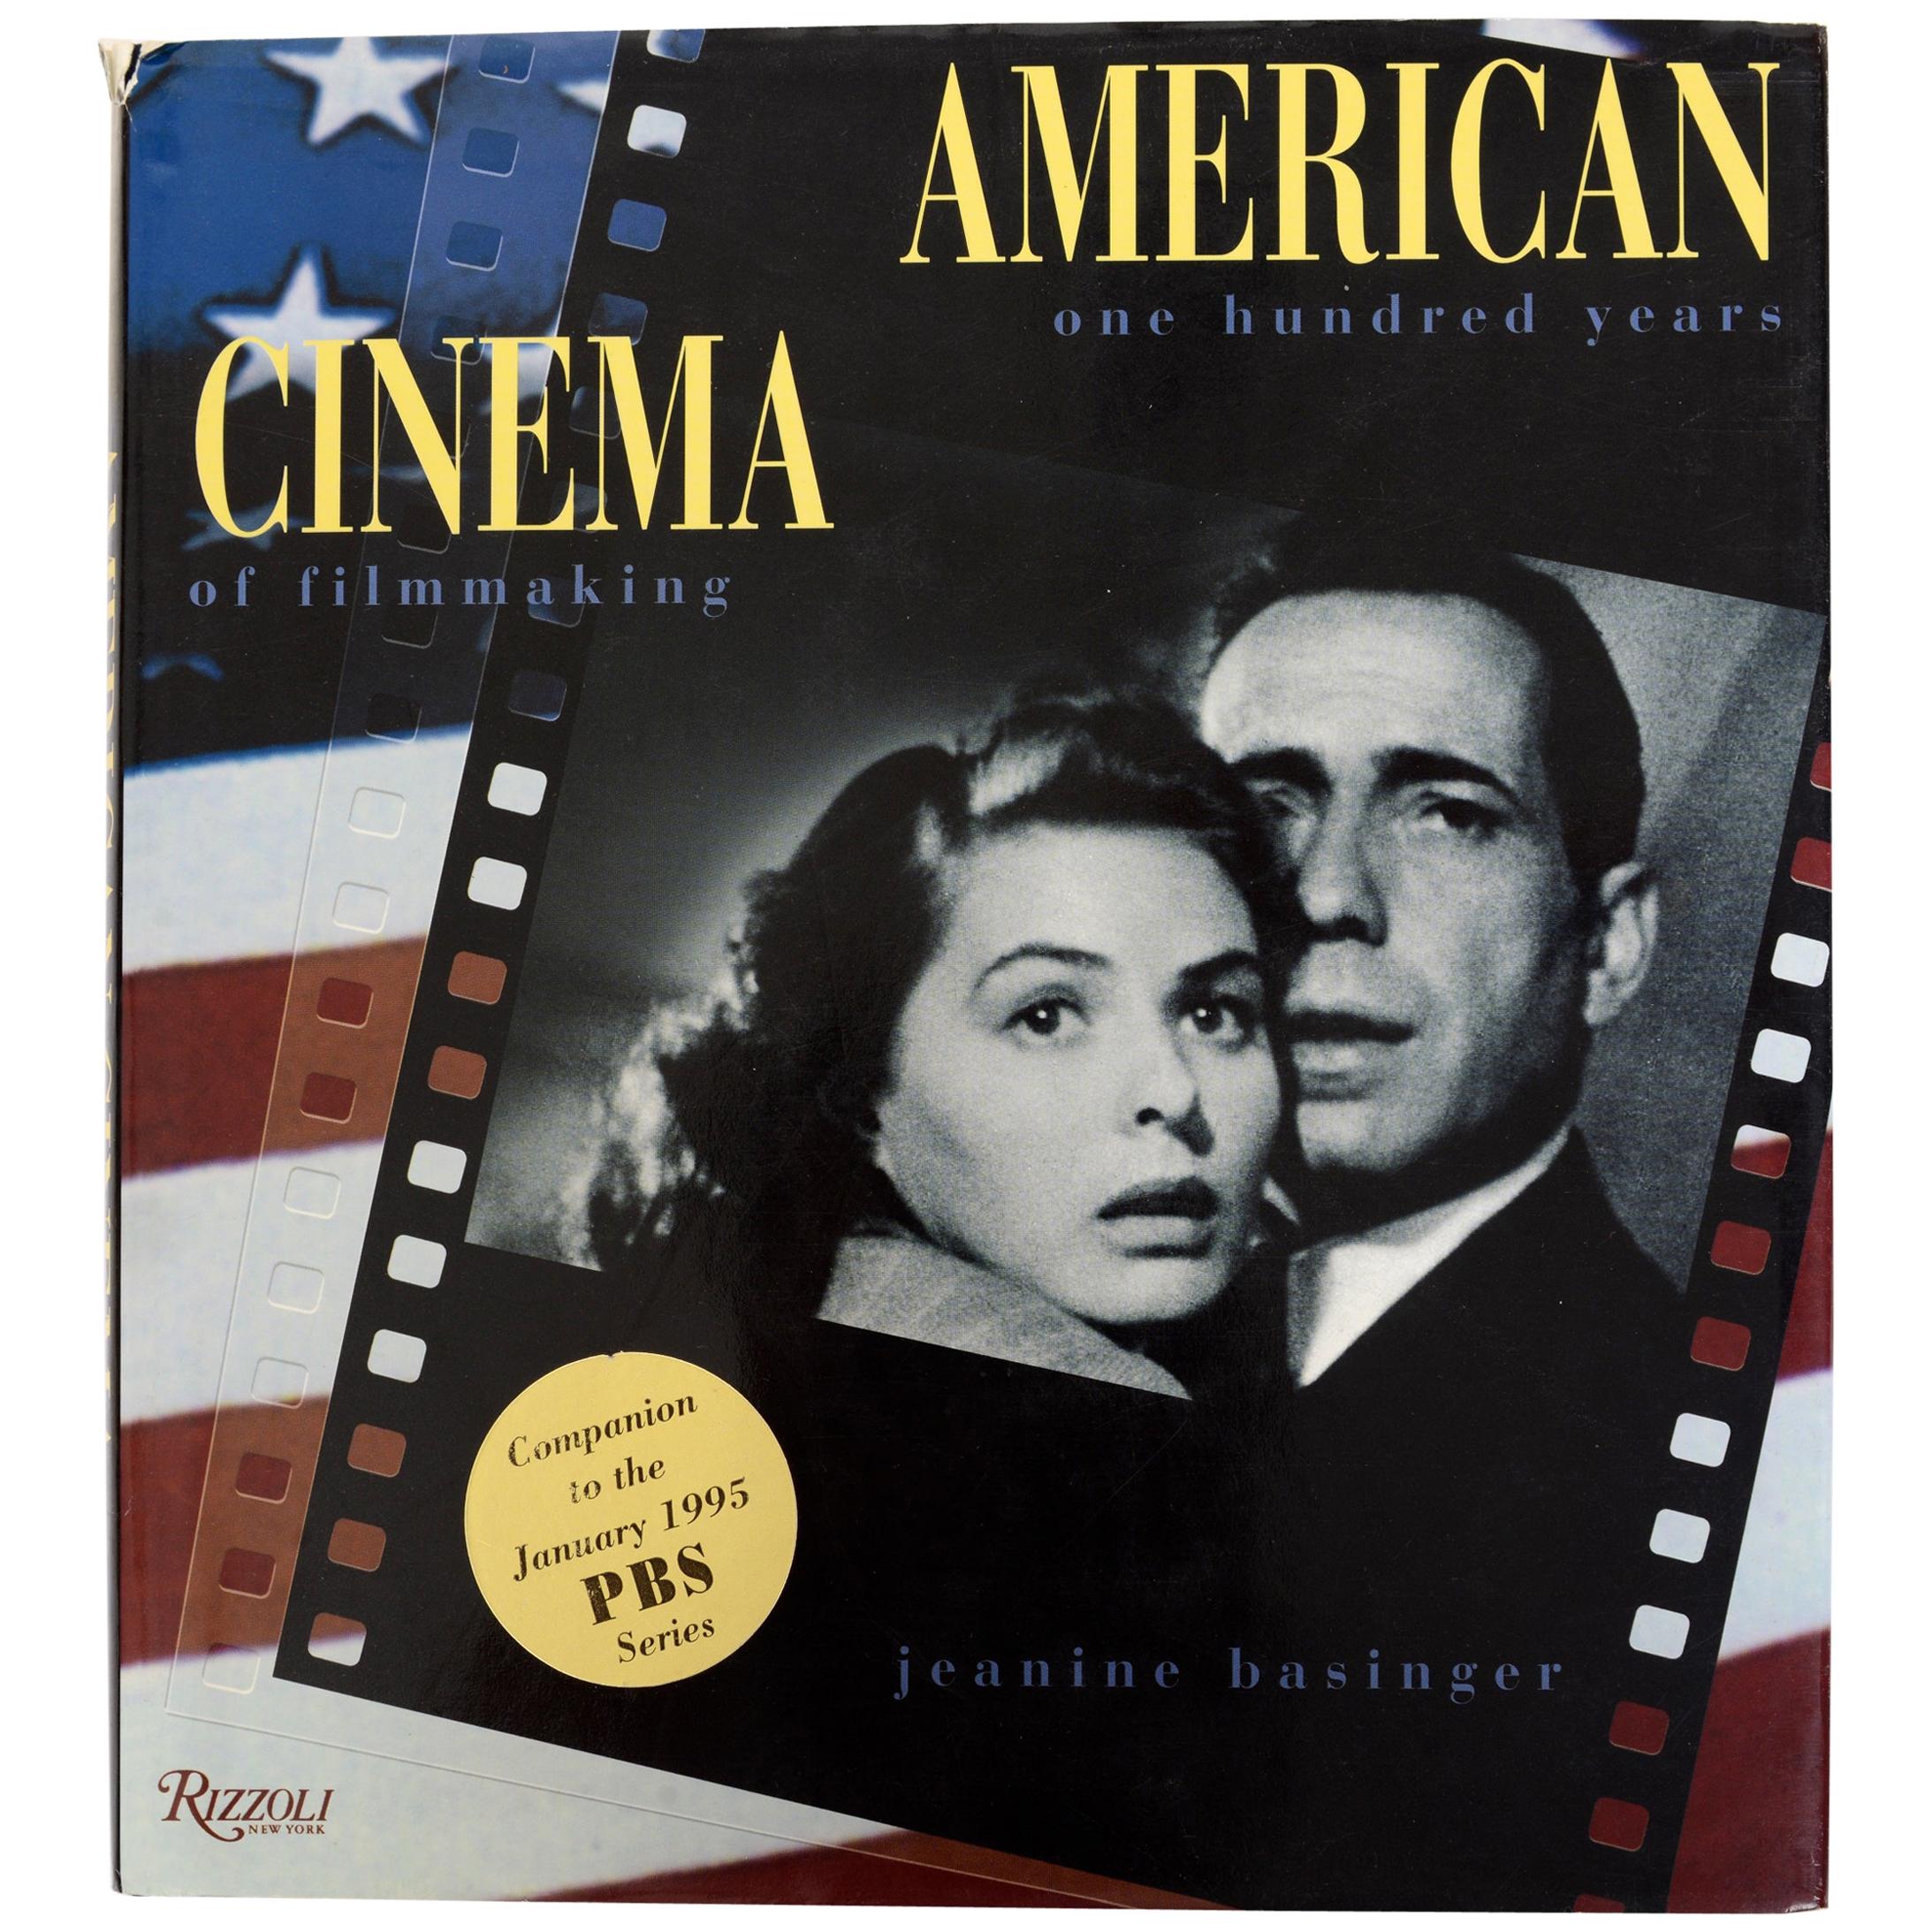 American Cinema One Hundred Years of Filmmaking by Jeanine Basinger 1st Ed